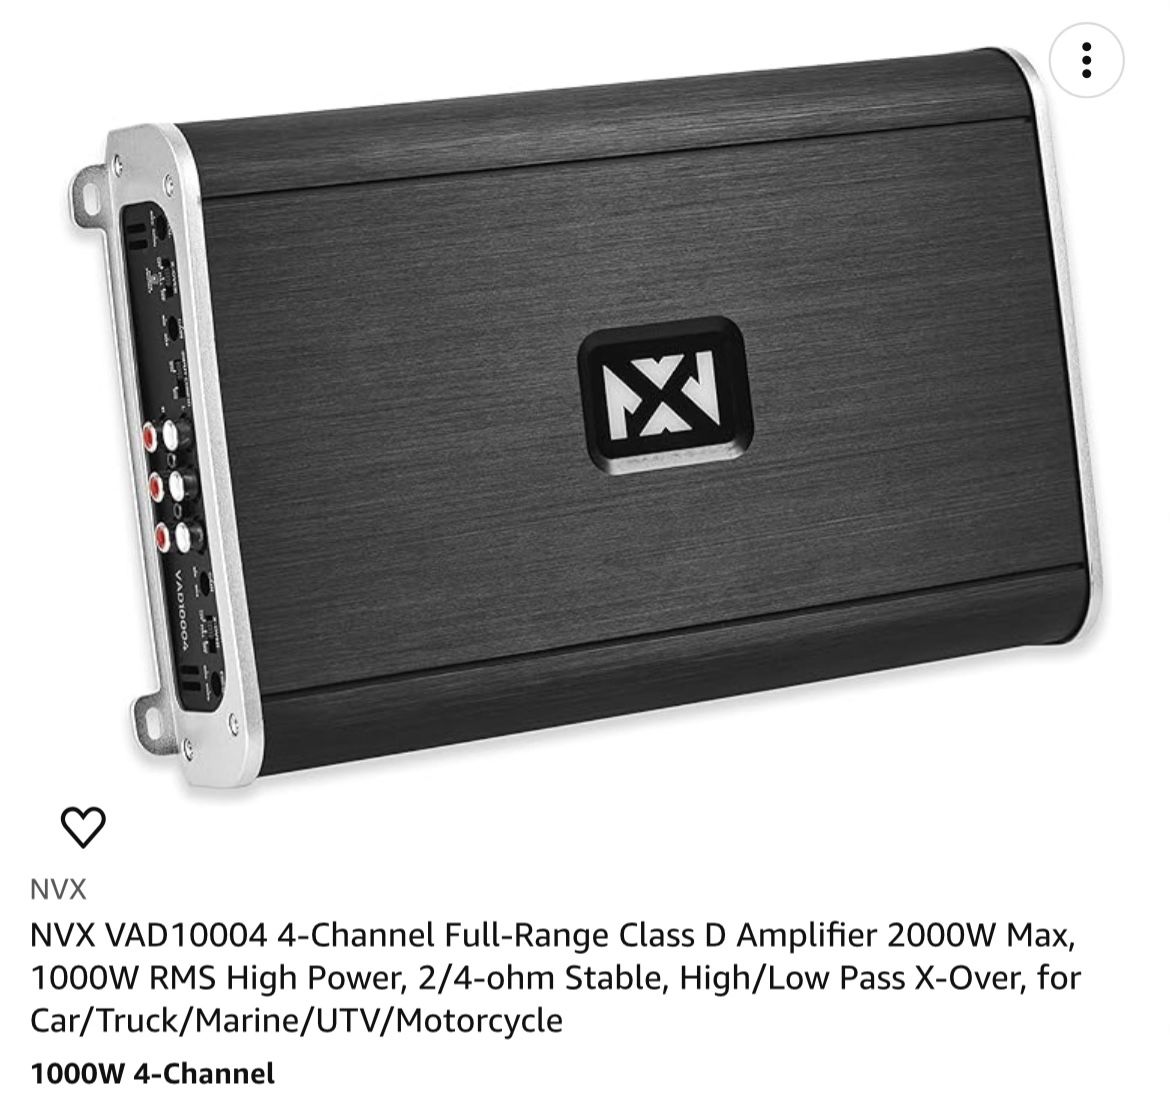 NVX VAD 10004 4-Channel Full-Range Class D Amplifier 2000W Max,